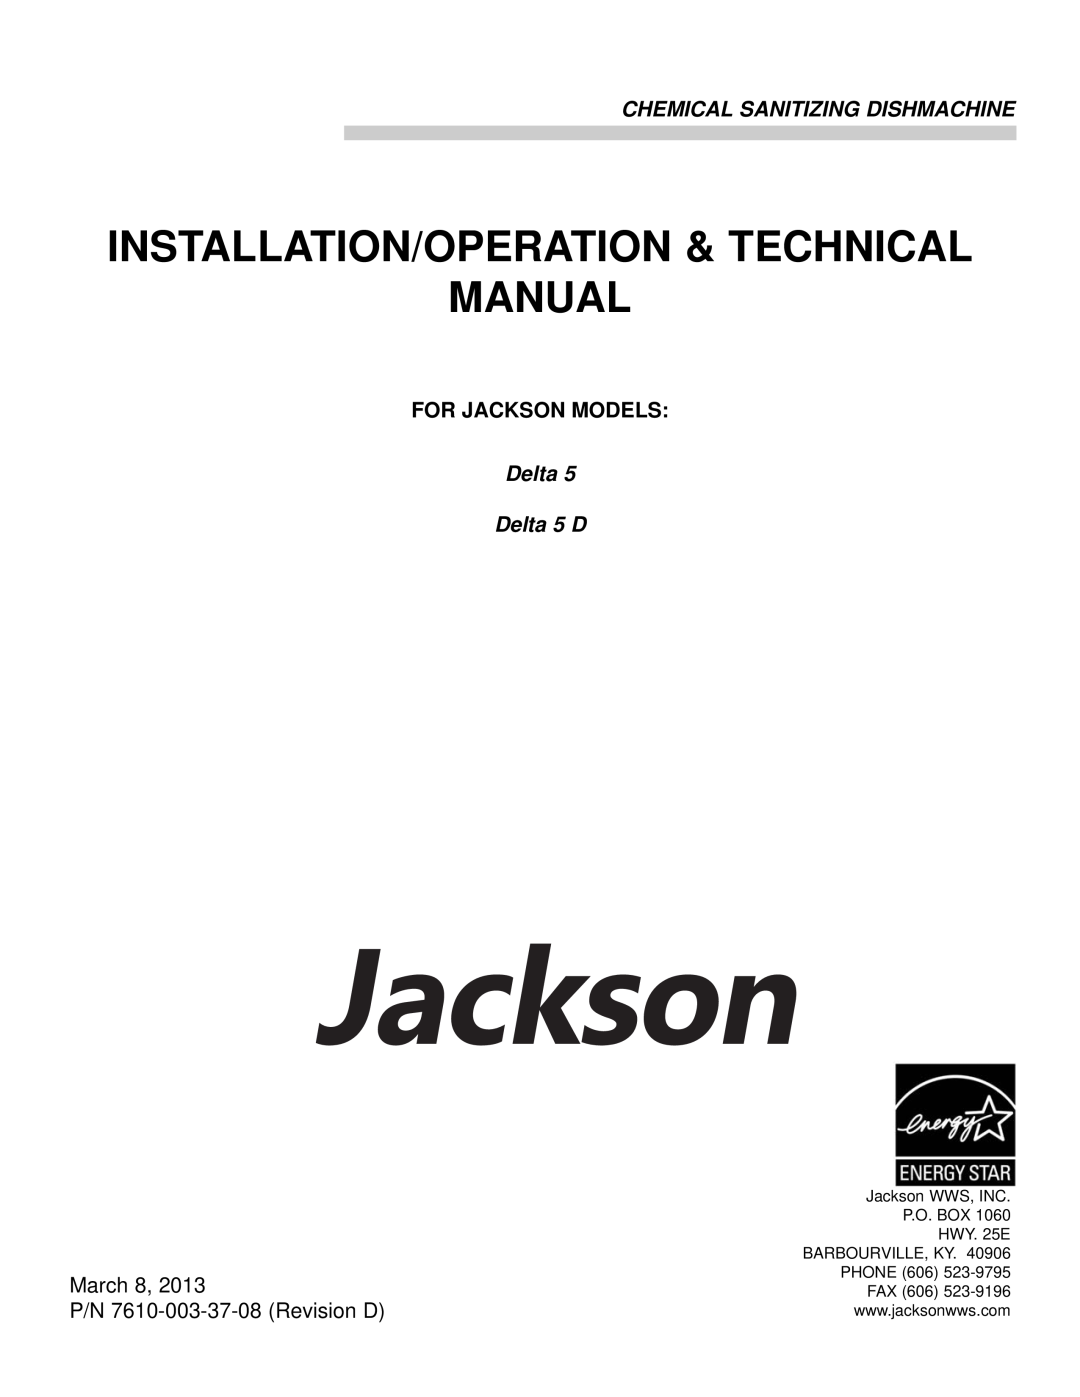 Jackson Chemical Sanitizing Dishmachine technical manual Installation/Operation & Technical Manual, For Jackson Models 